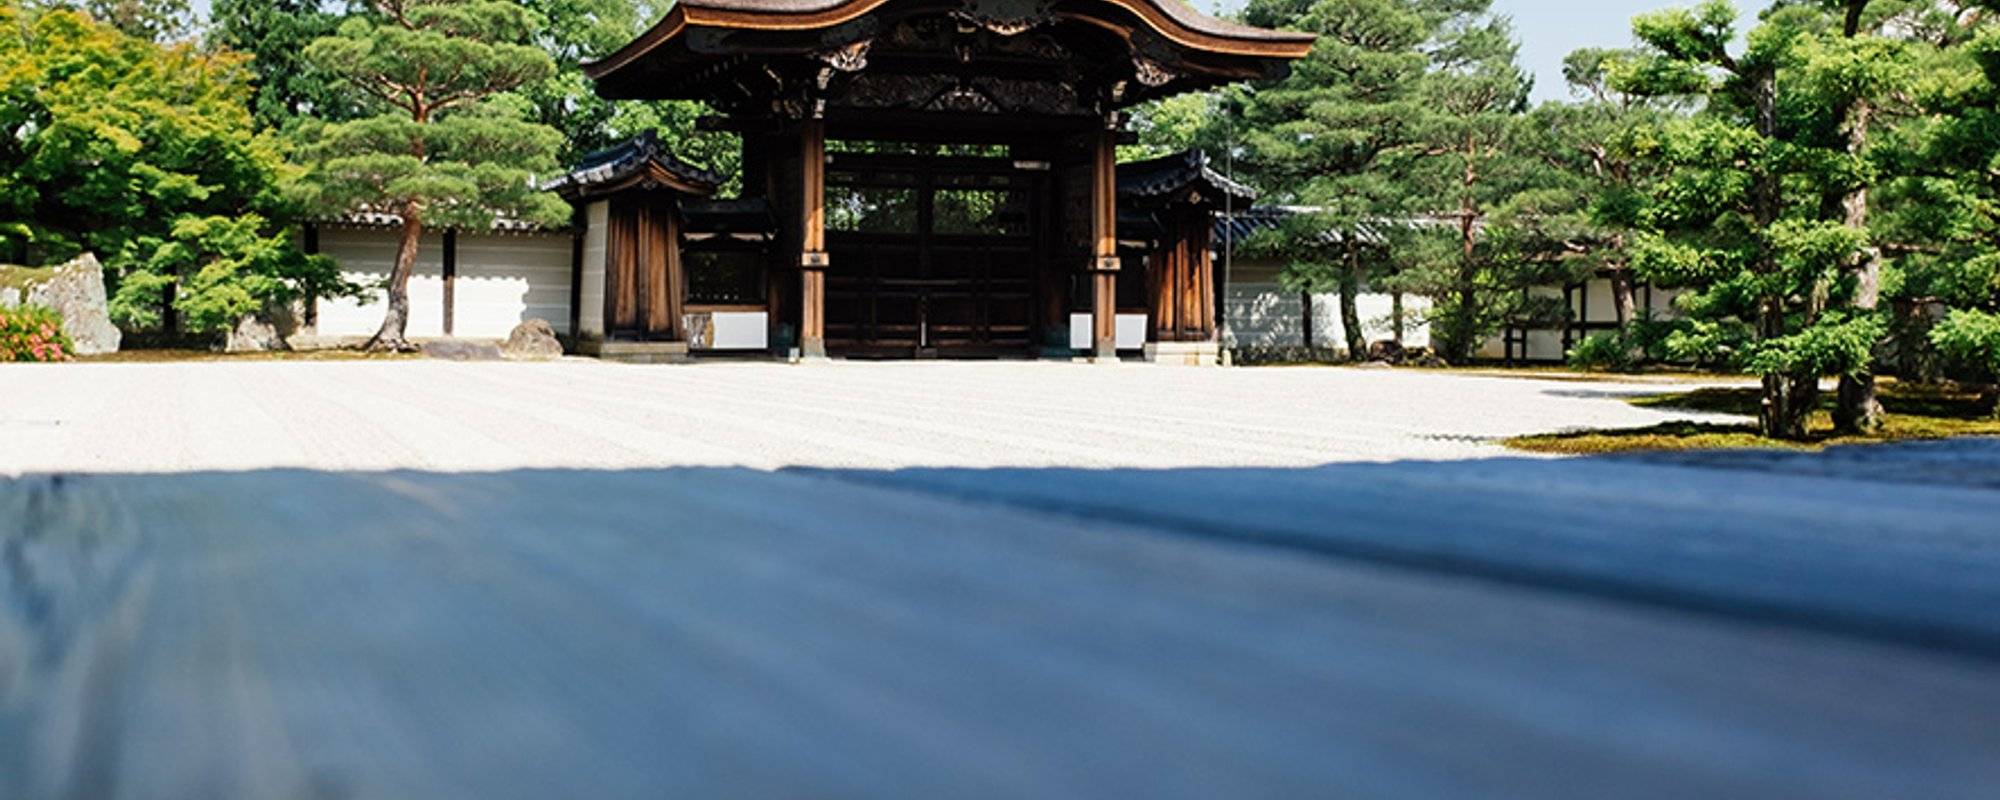 Exploring Japan - A Visit to Ninna-ji Temple Garden in Kyoto